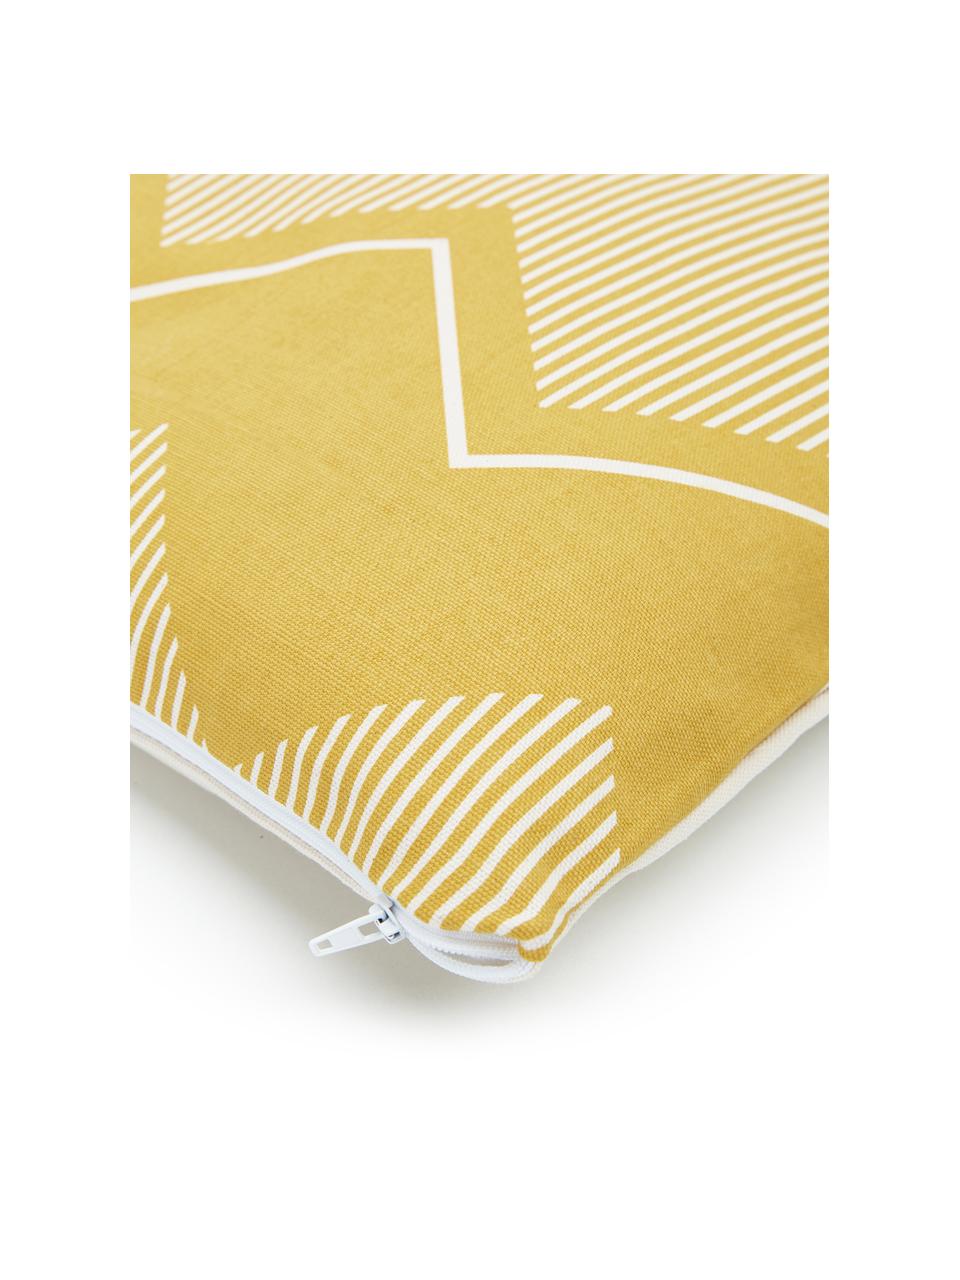 Boho kussenhoes Indy in crèmewit/geel, 100% katoen, Wit & geel, patroon, B 45 x L 45 cm